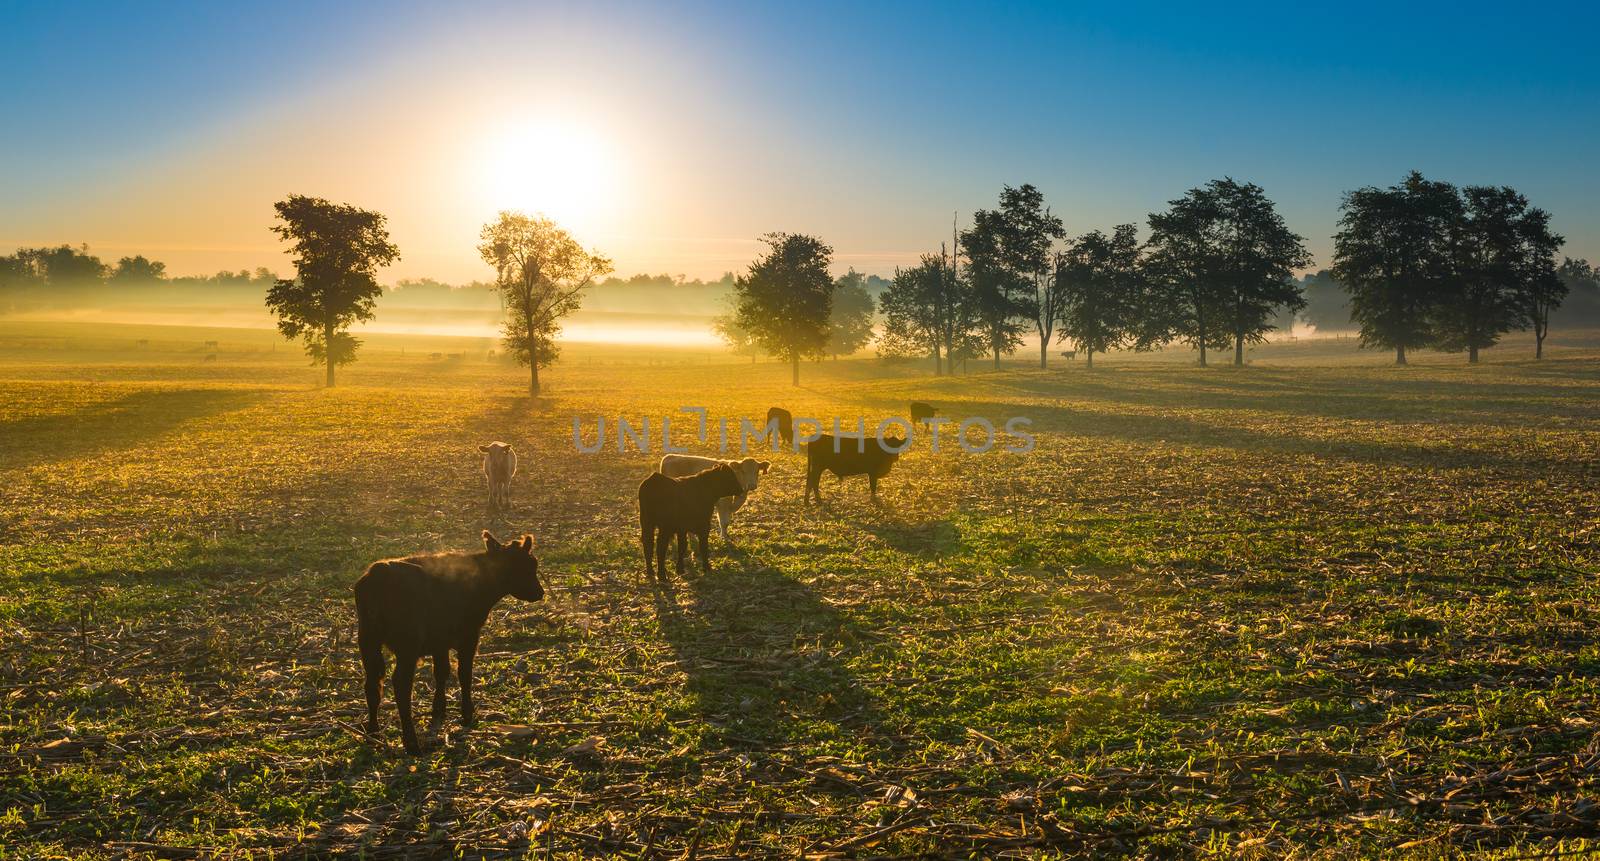 Cows in a Cornfield by patrickstock